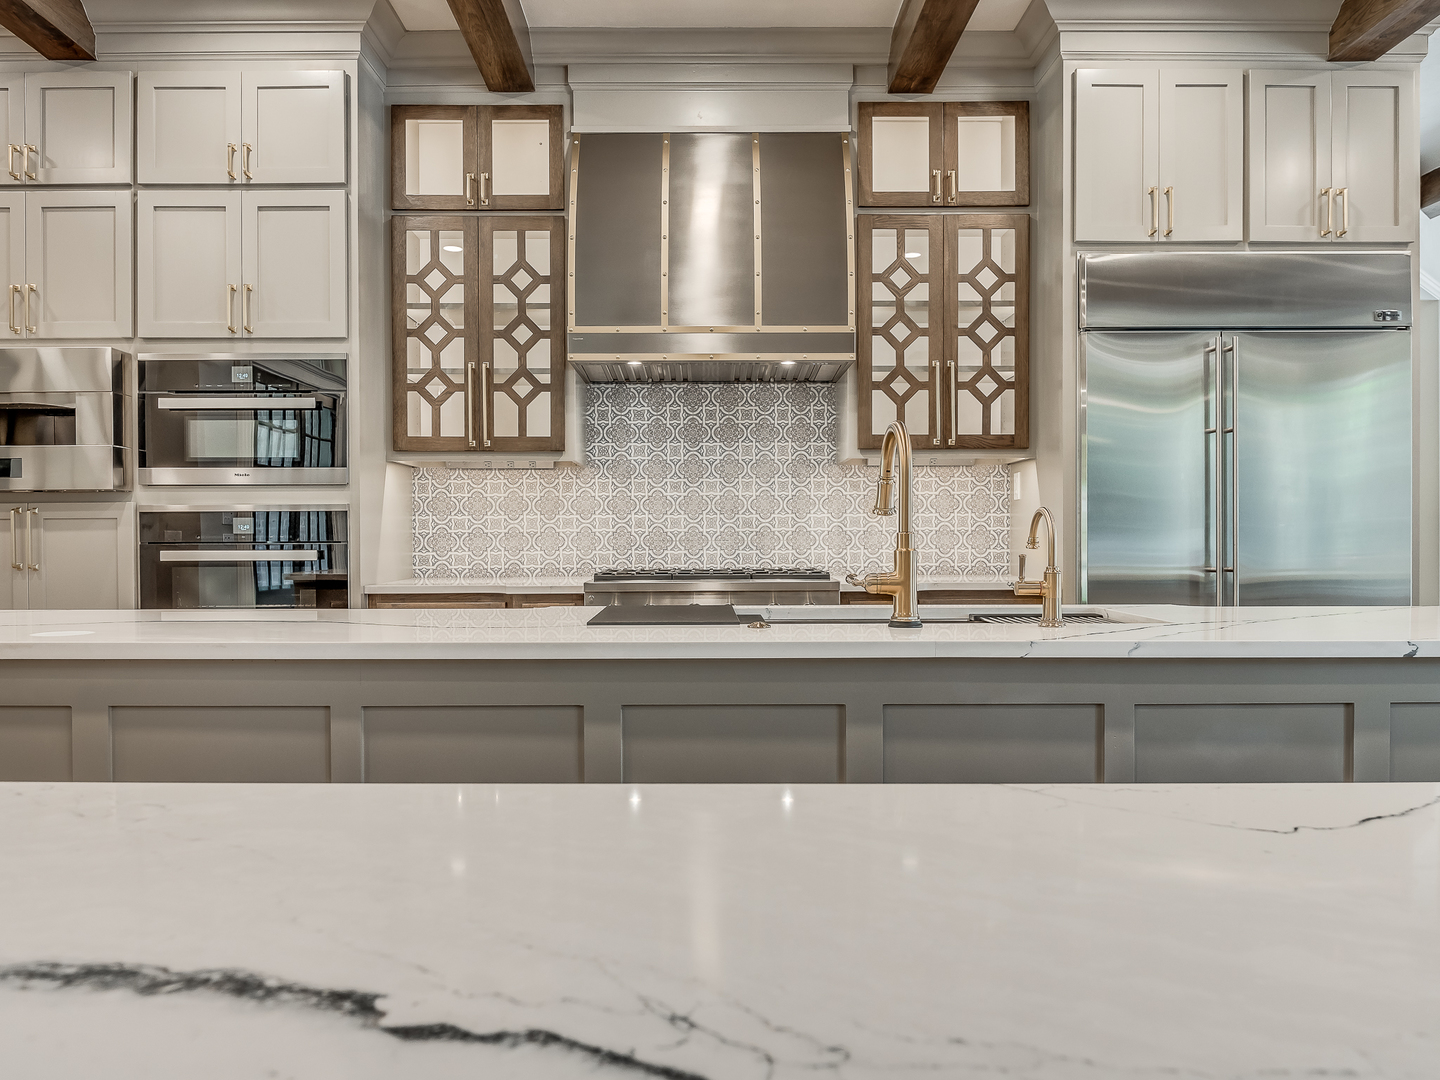 Innovative kitchen design idea,range hood options, contemporary kitchen styles, crisp white kitchen cabinets, white kitchen countertops, and marble backsplash